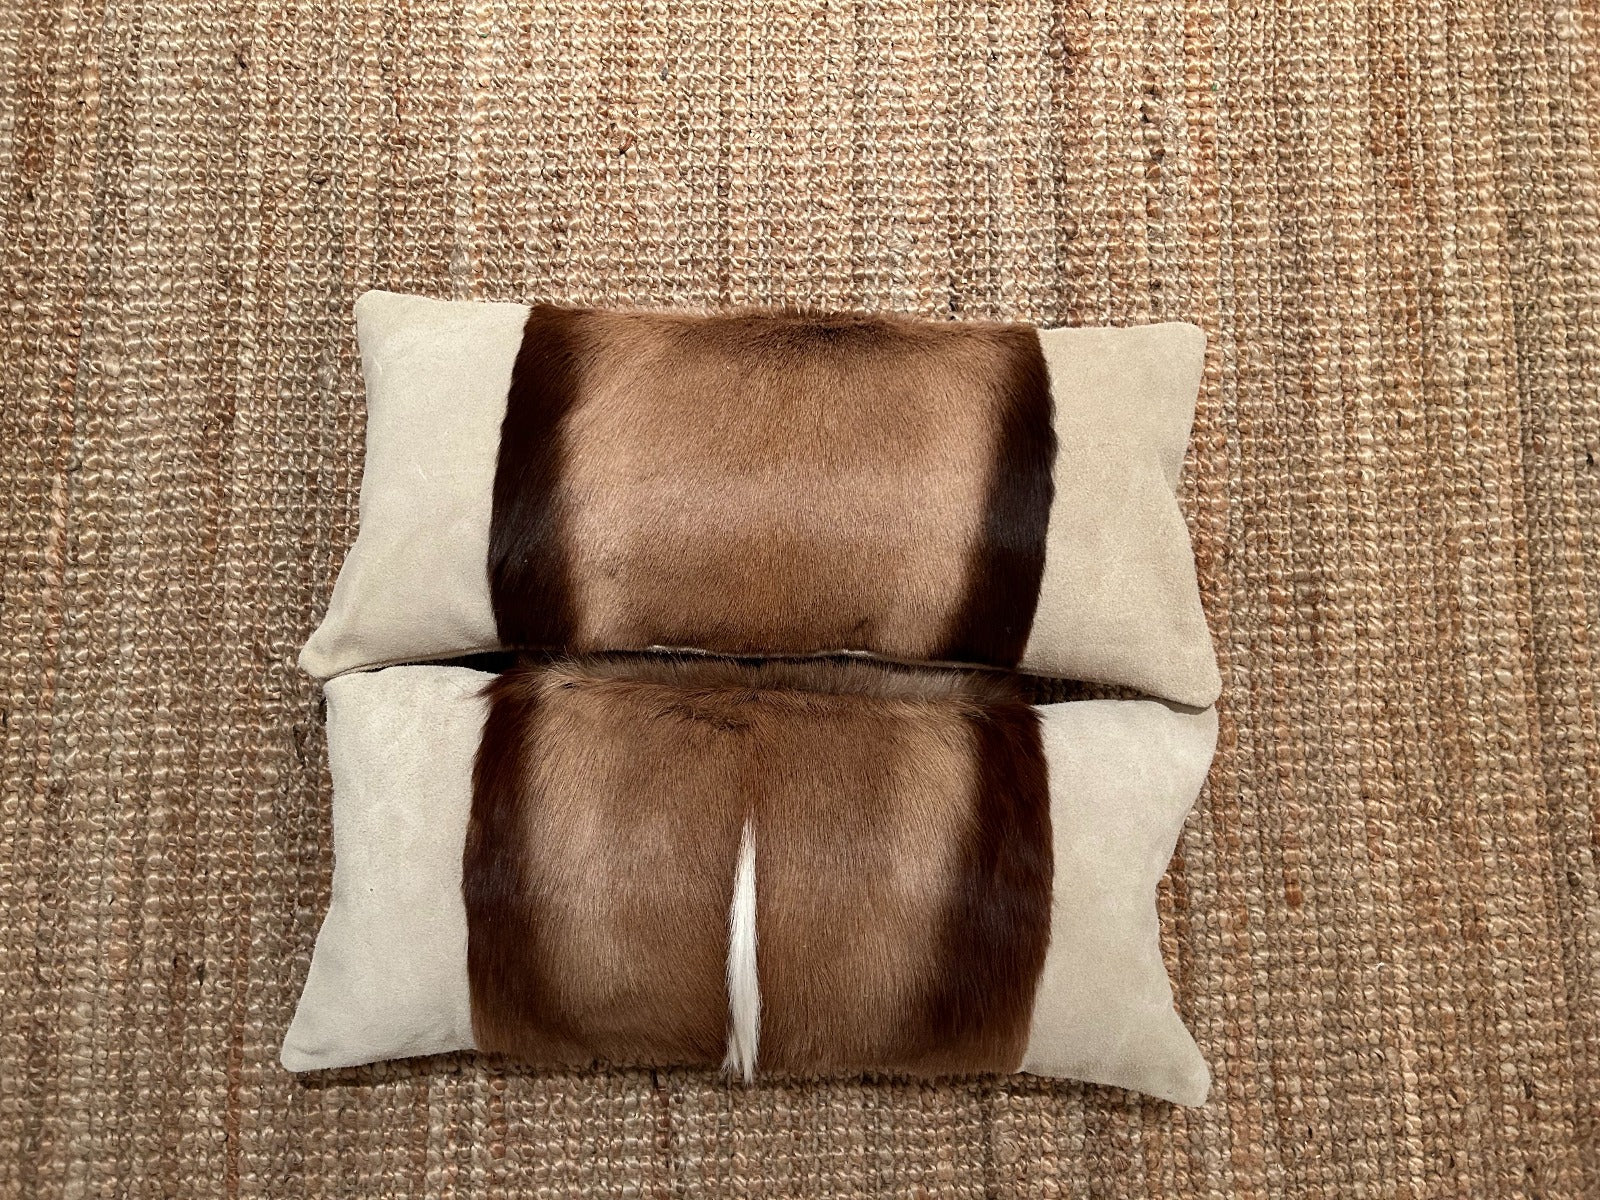 Springbok Pillow Cover - Size: 21"x10" (similar to cow hide skin pillow)